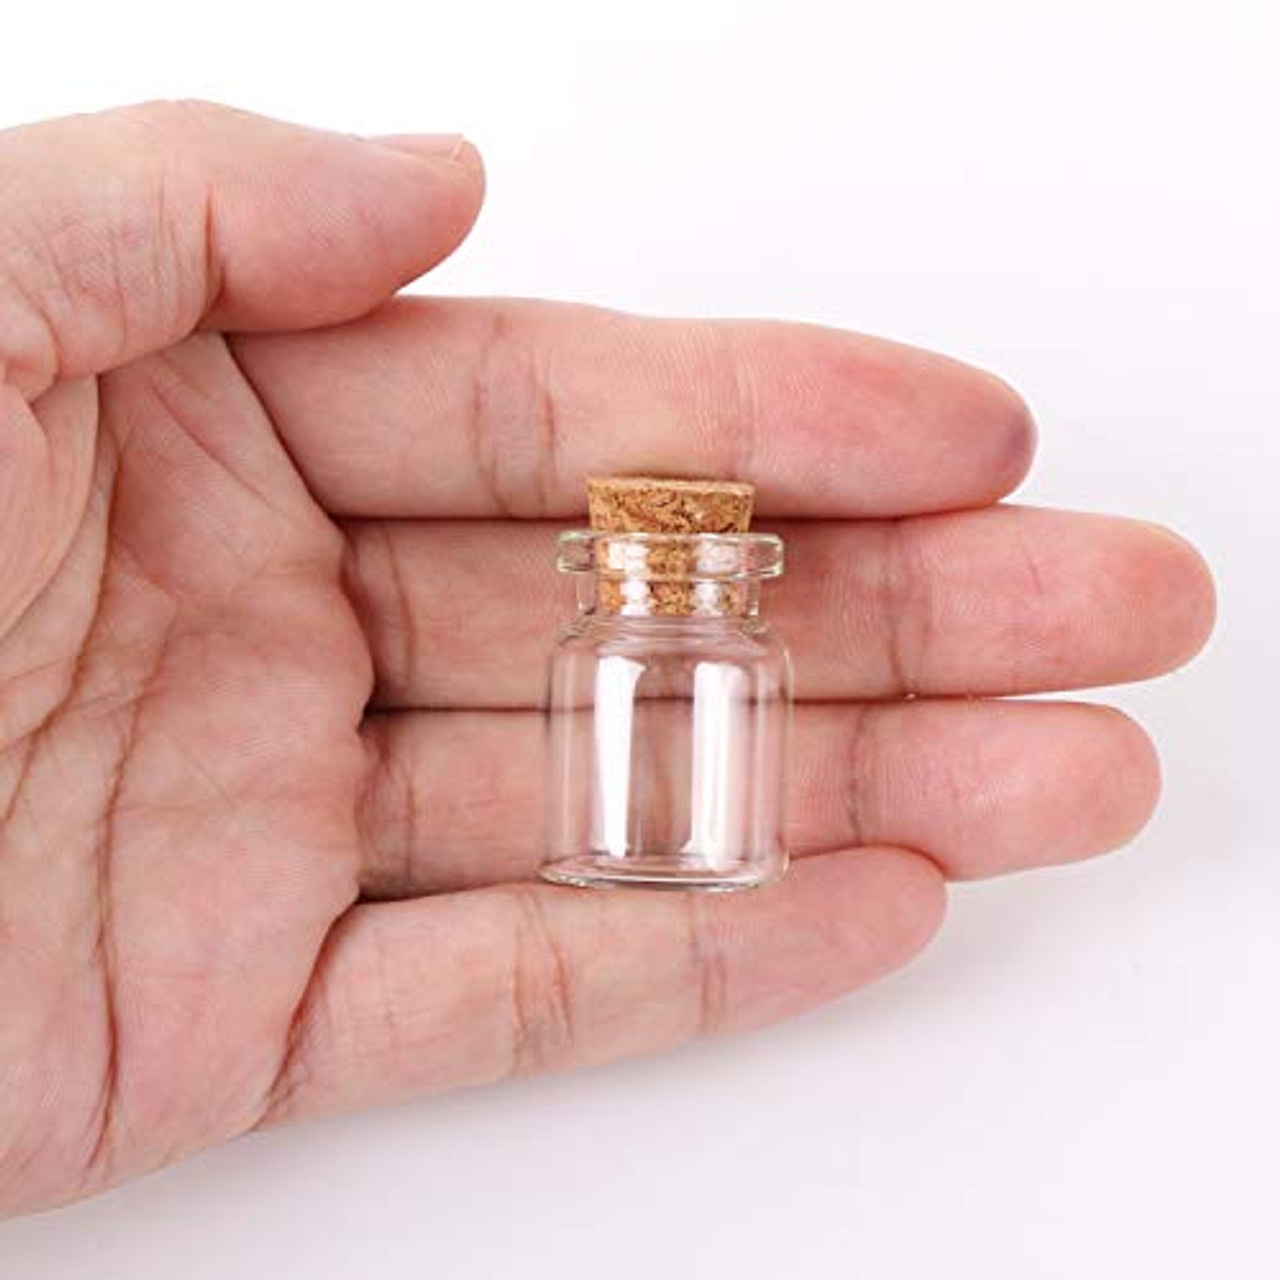 10x Blamk Mini Small Cork Stopper Glass Vial Jars Containers Bottle Wholesa P3V4 